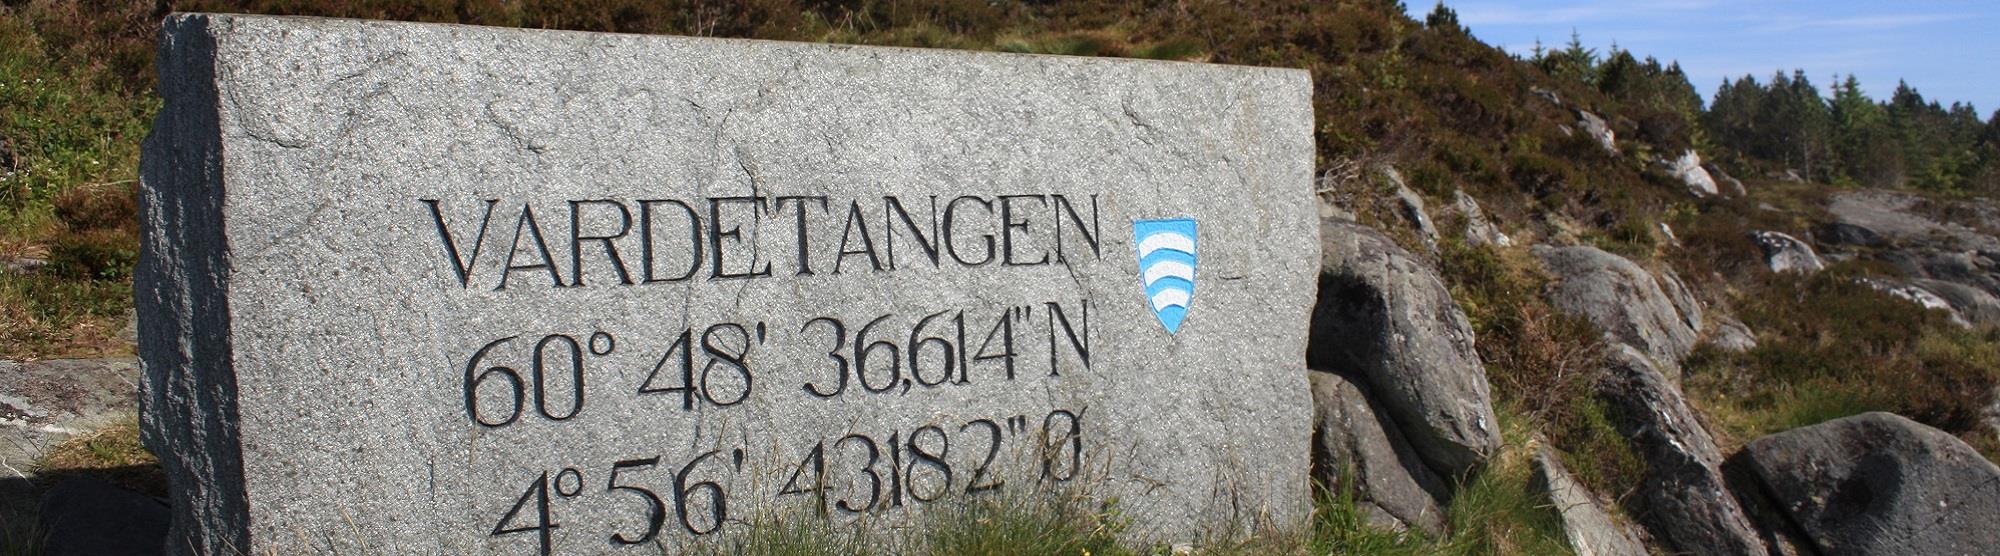 Vardetangen – the westernmost point in mainland Norway